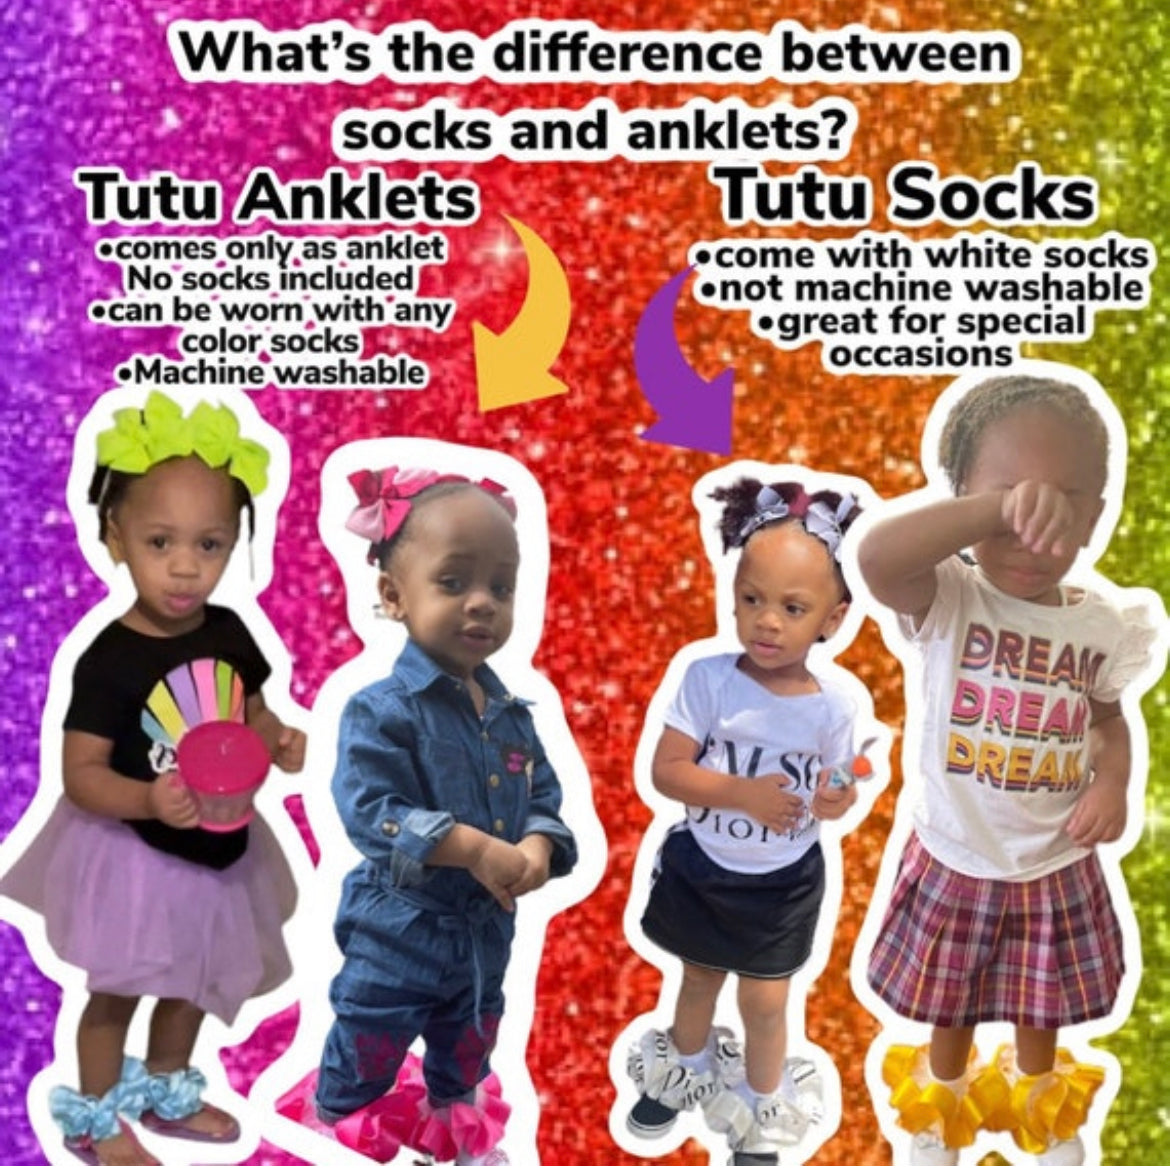 Mardi Gras themed tutu socks | Marci Gras tutuanklets|Mardi Gras themed socks|mardi gras ruffle socks - ReignBowsNtoes